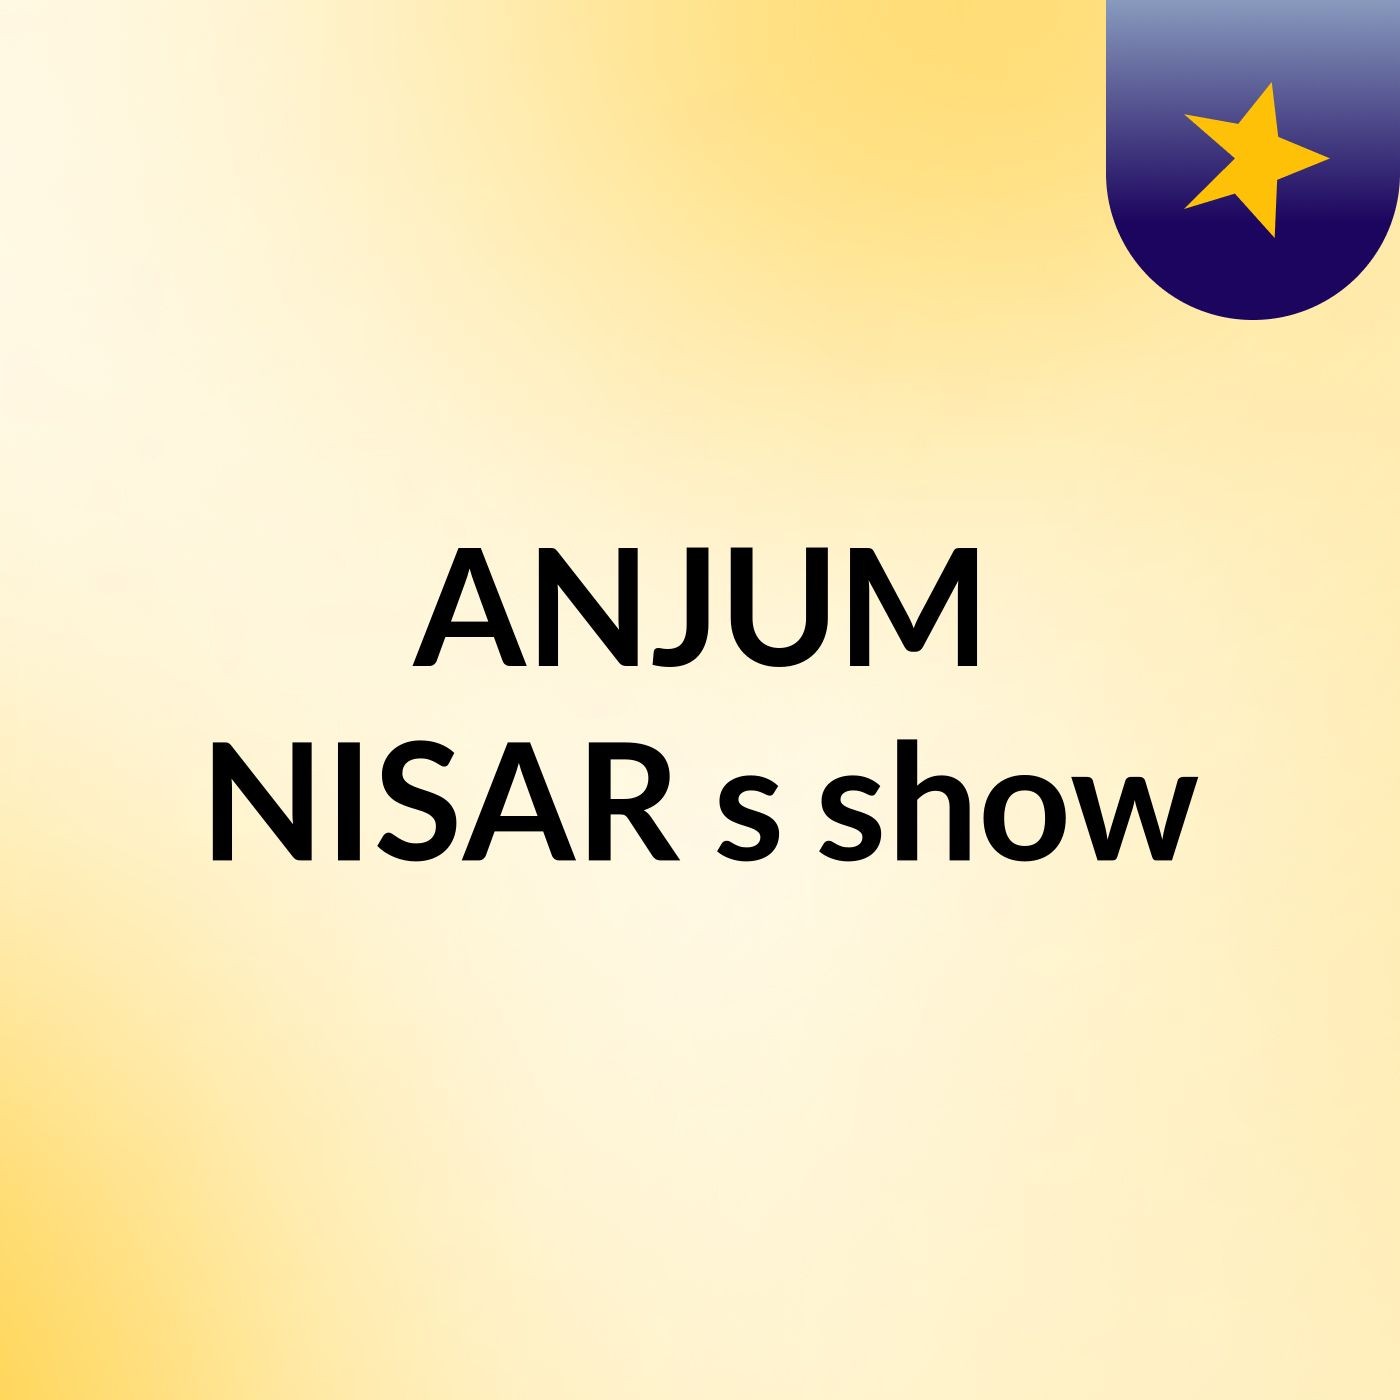 ANJUM NISAR's show